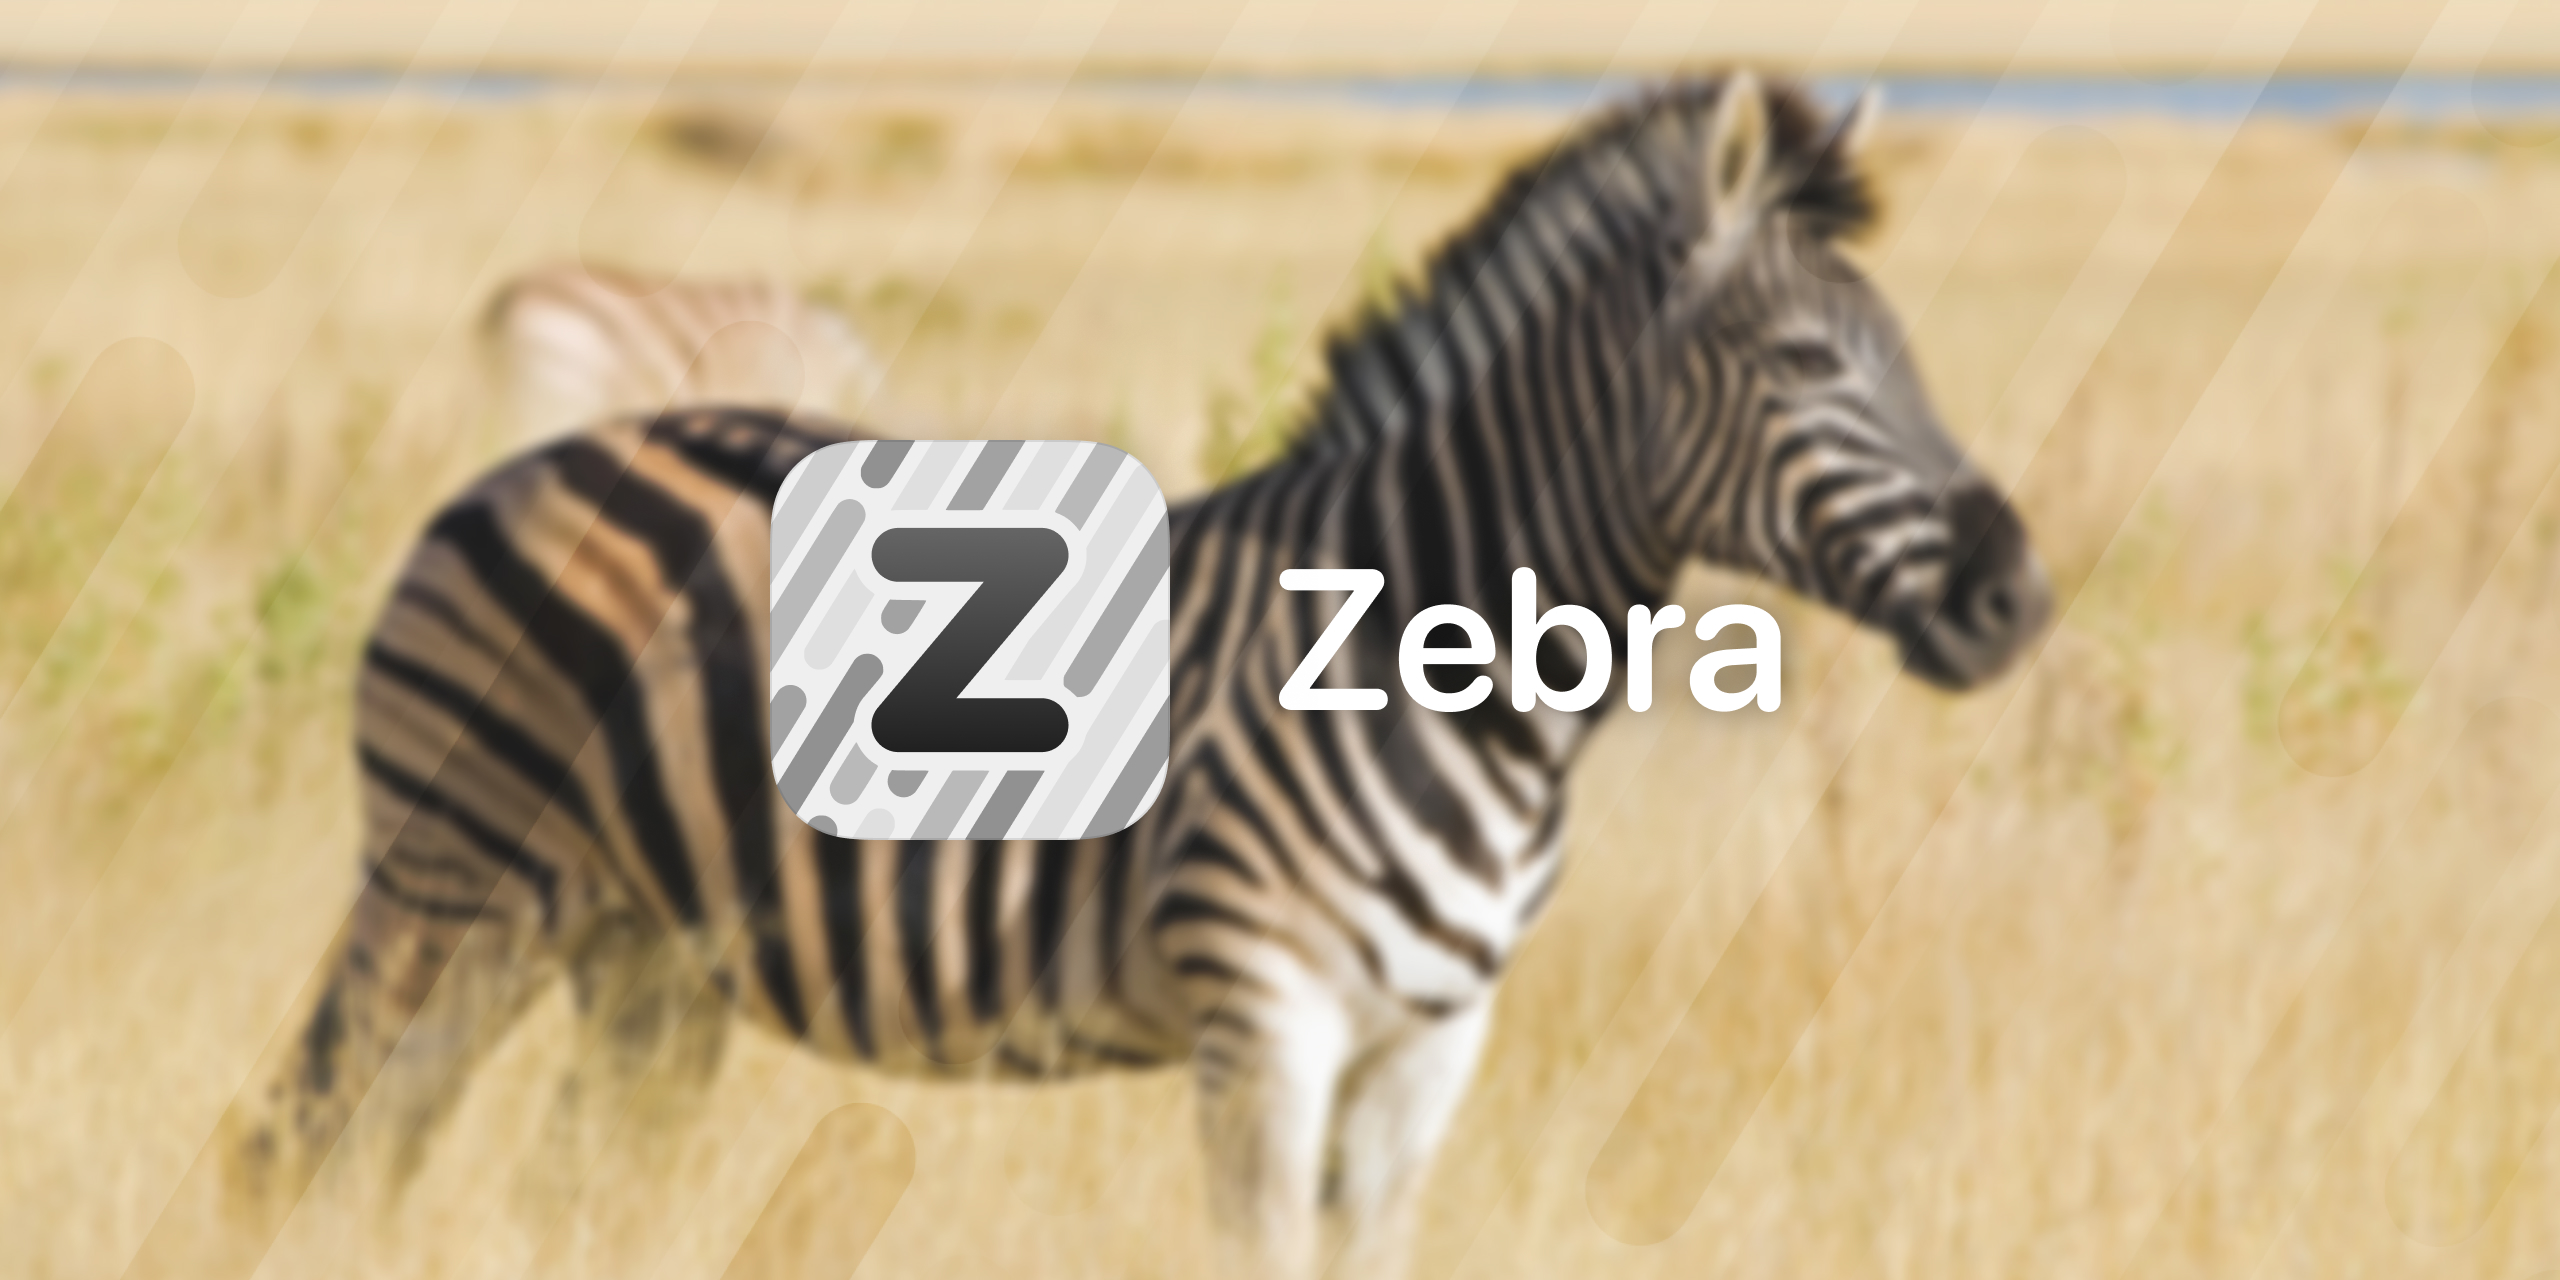 Zebra package manager promo image.